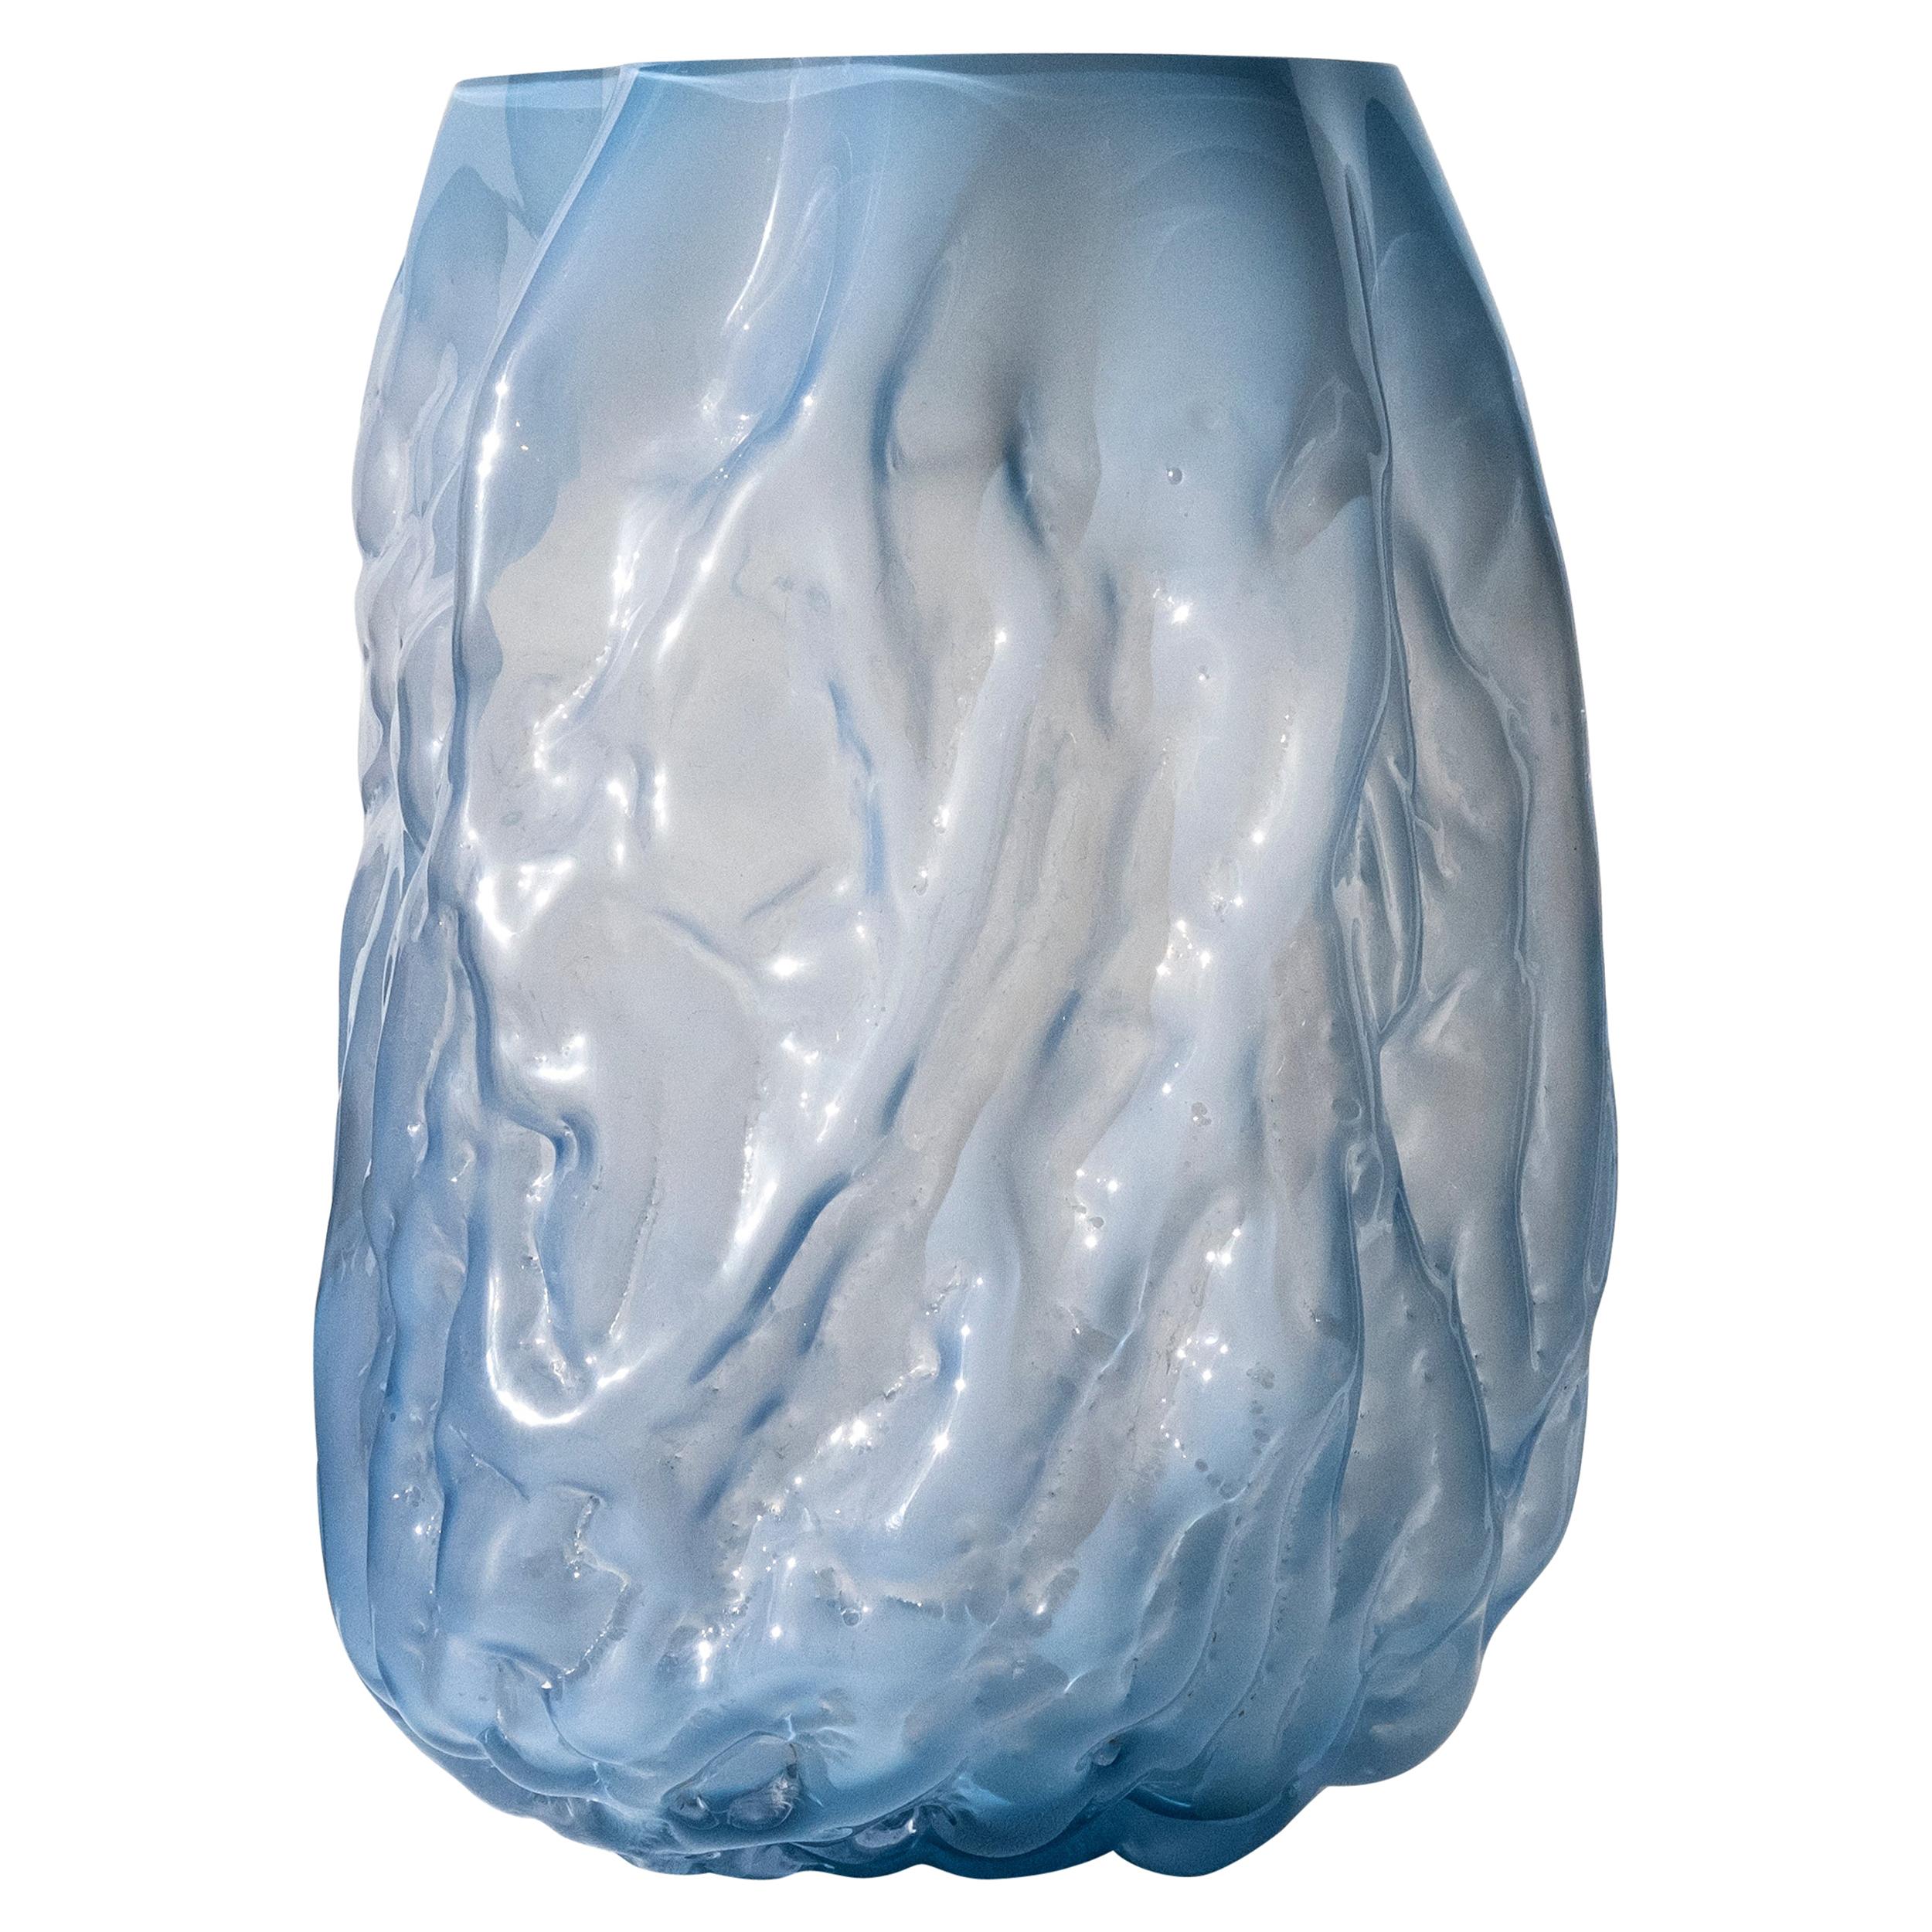 Hand Blown Contemporary Blue Glass Vase by Erik Olovsson